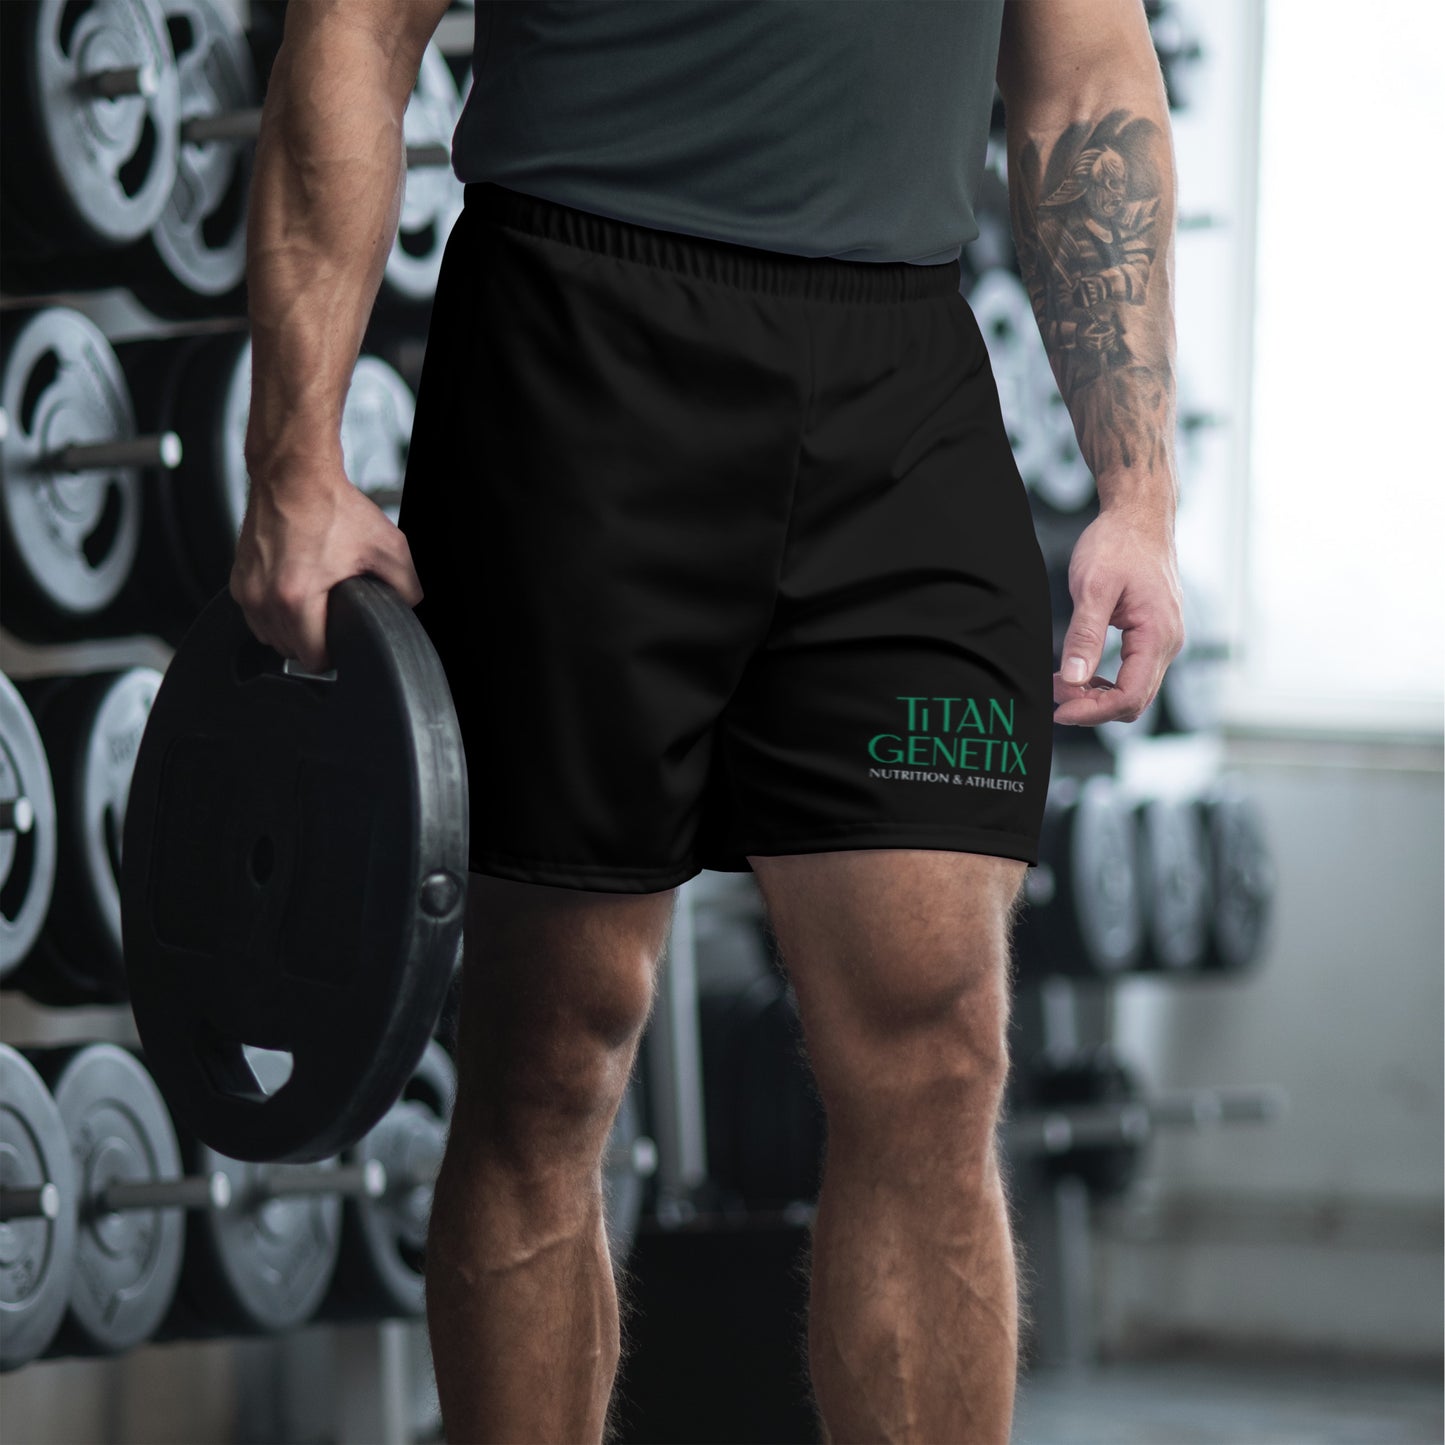 Titan Genetix Nutrition & Athletics - Men's Athletic Shorts